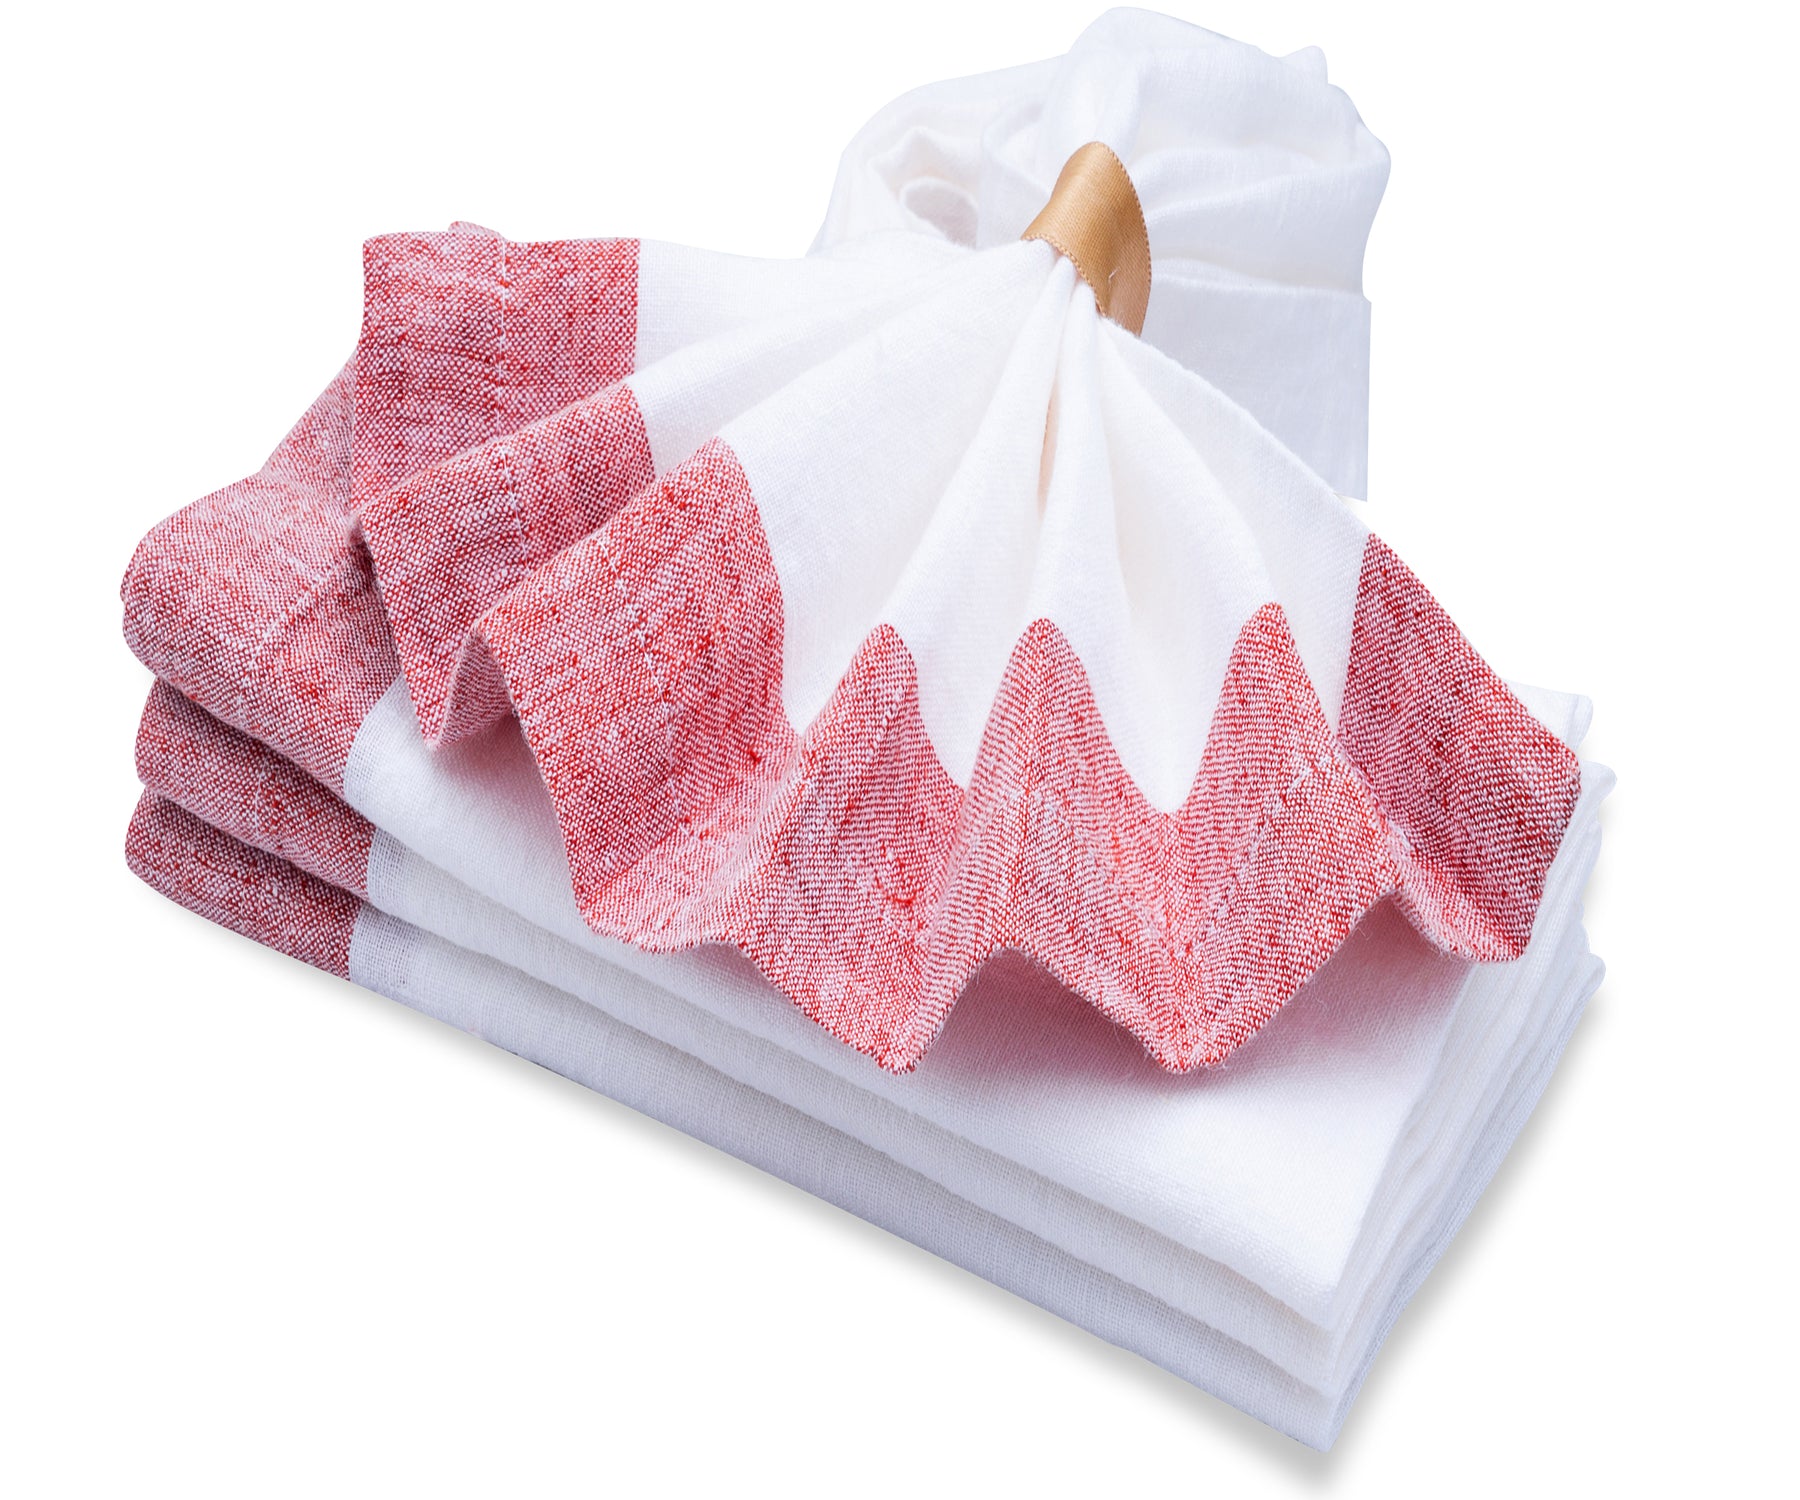 Assorted linens napkins adding color to the dining setup.